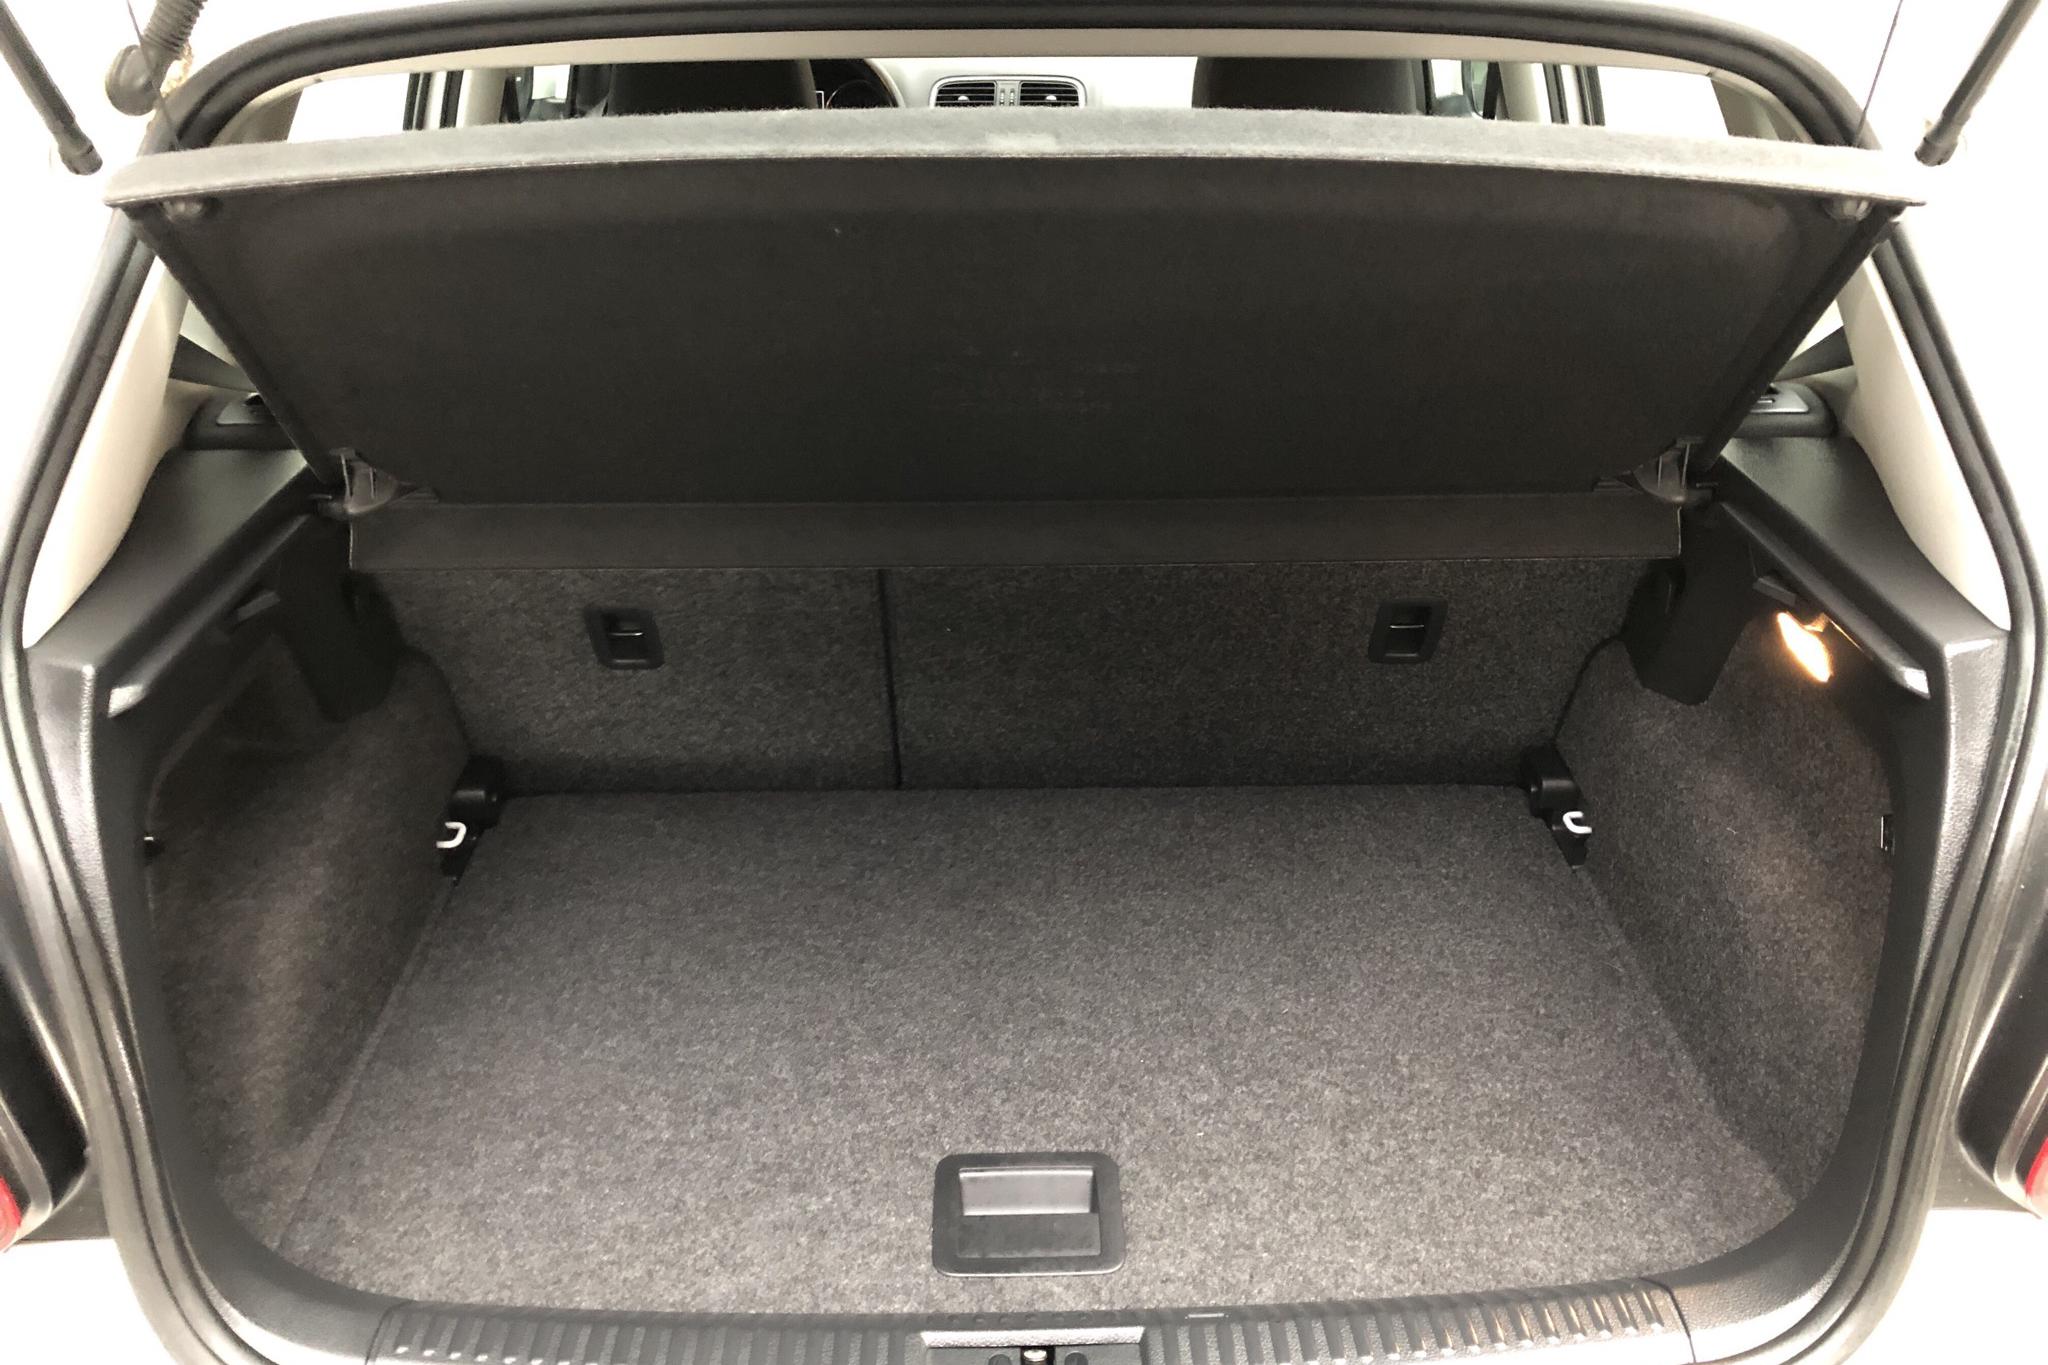 VW Polo 1.2 TSI 5dr (90hk) - 8 061 mil - Manuell - vit - 2017